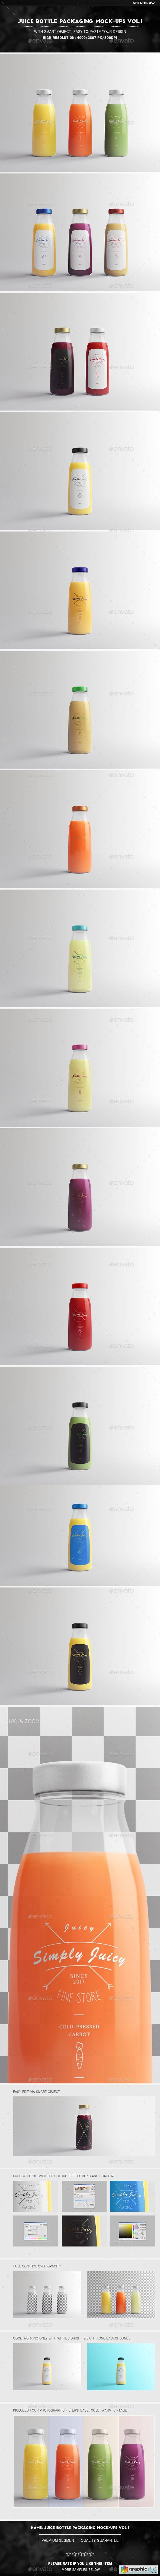 Juice Bottle Packaging Mock-Ups Vol.1